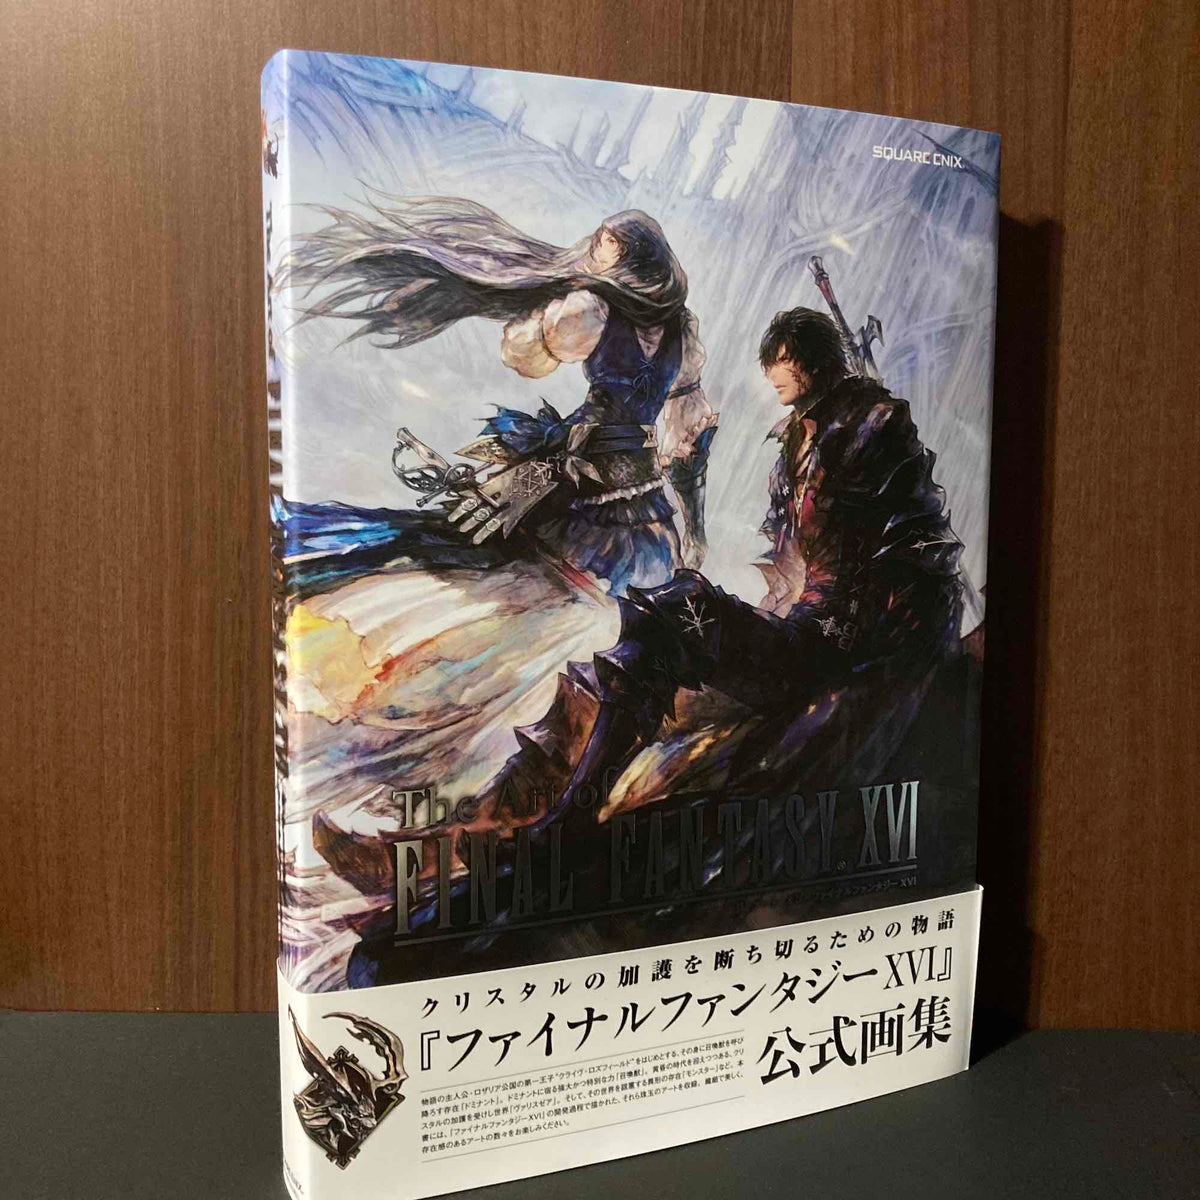 The Art of Final Fantasy IX ファイナルファンタジー9 画集/設定資料 